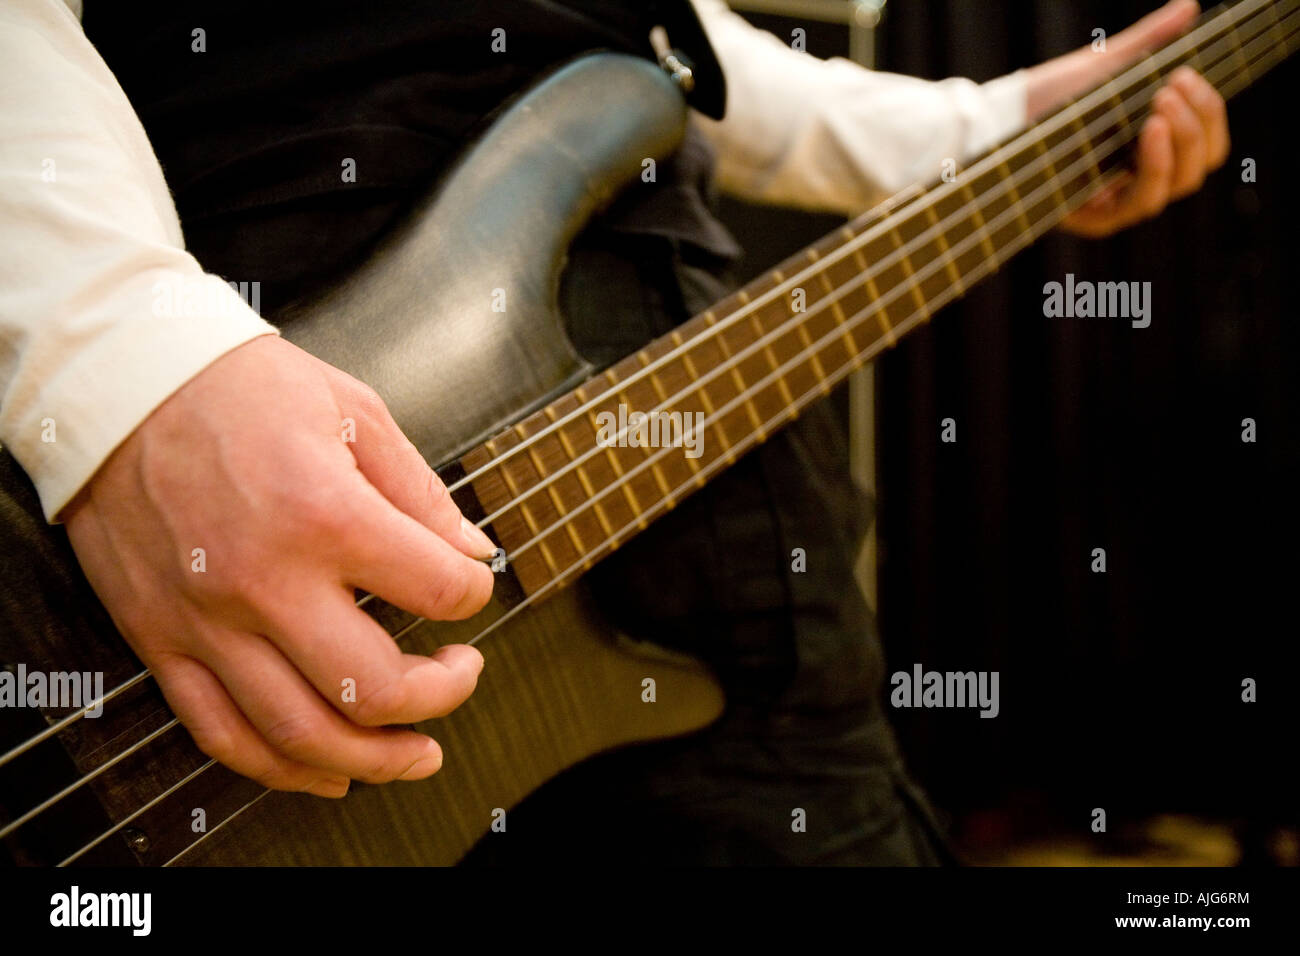 Young man playing bass guitar Stock Photo